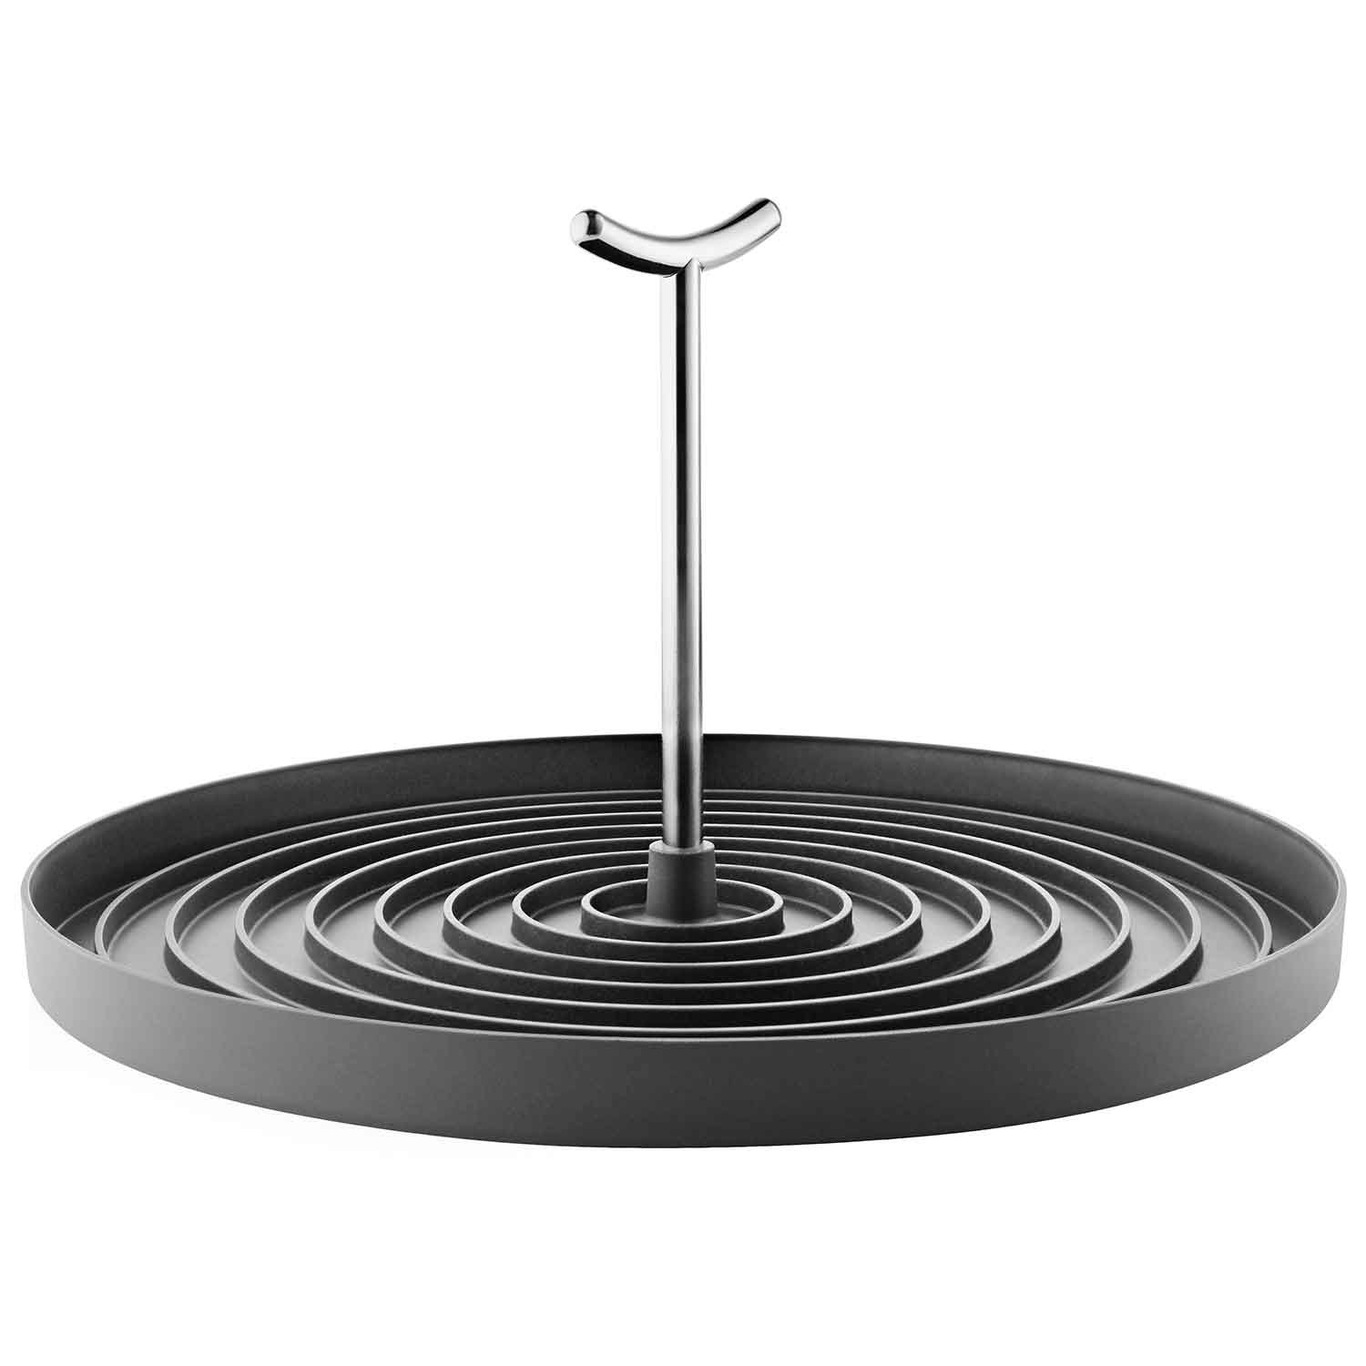 https://royaldesign.com/image/2/eva-solo-foldable-dish-drainer-31-cm-0?w=800&quality=80